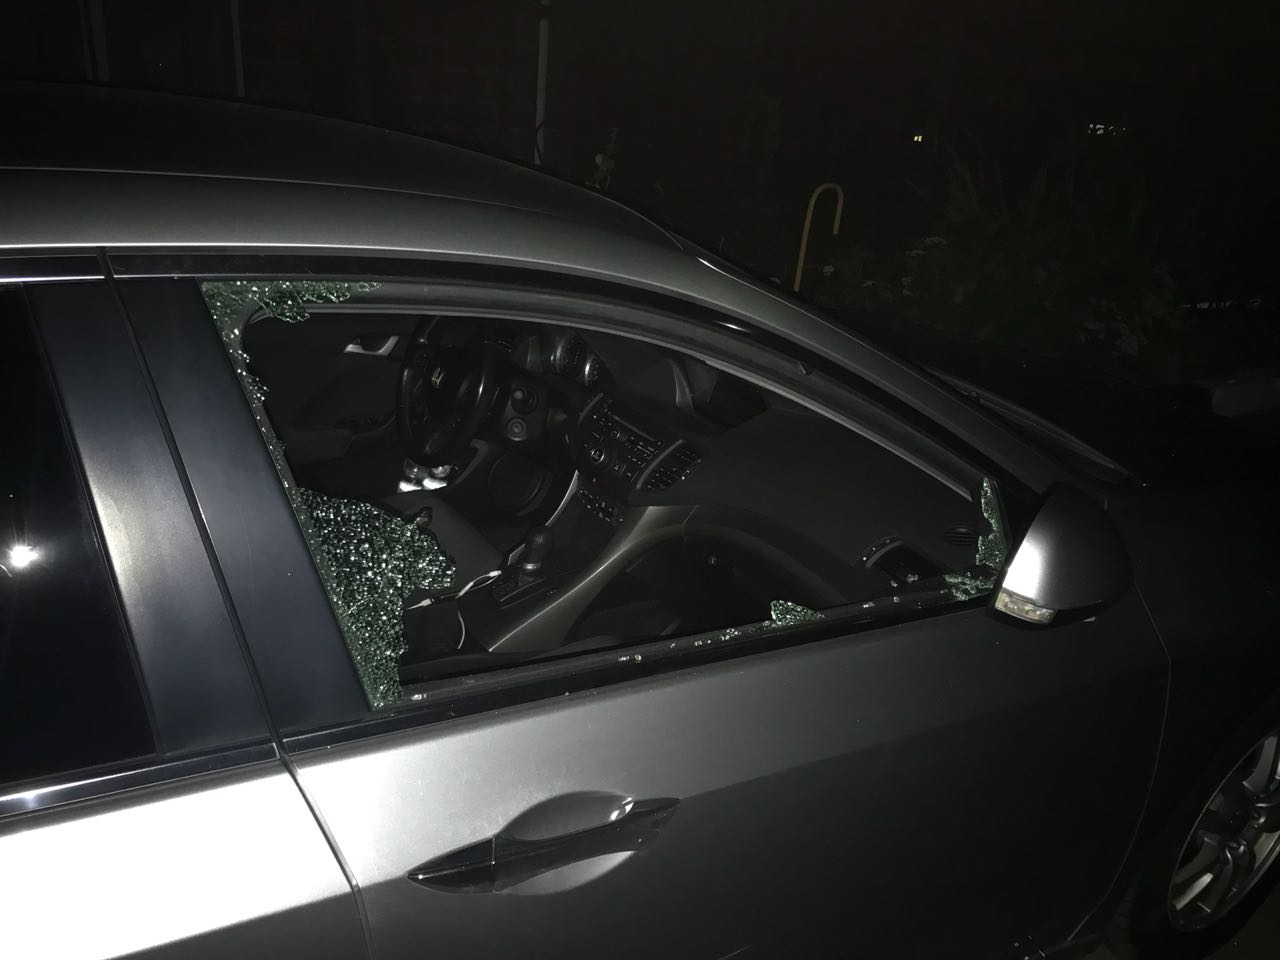 Разбиты окна машин. Разбил окно в машине. Разбитое боковое стекло. Разбитое стекло автомобиля тонированное. Мерседес разбитое стекло.